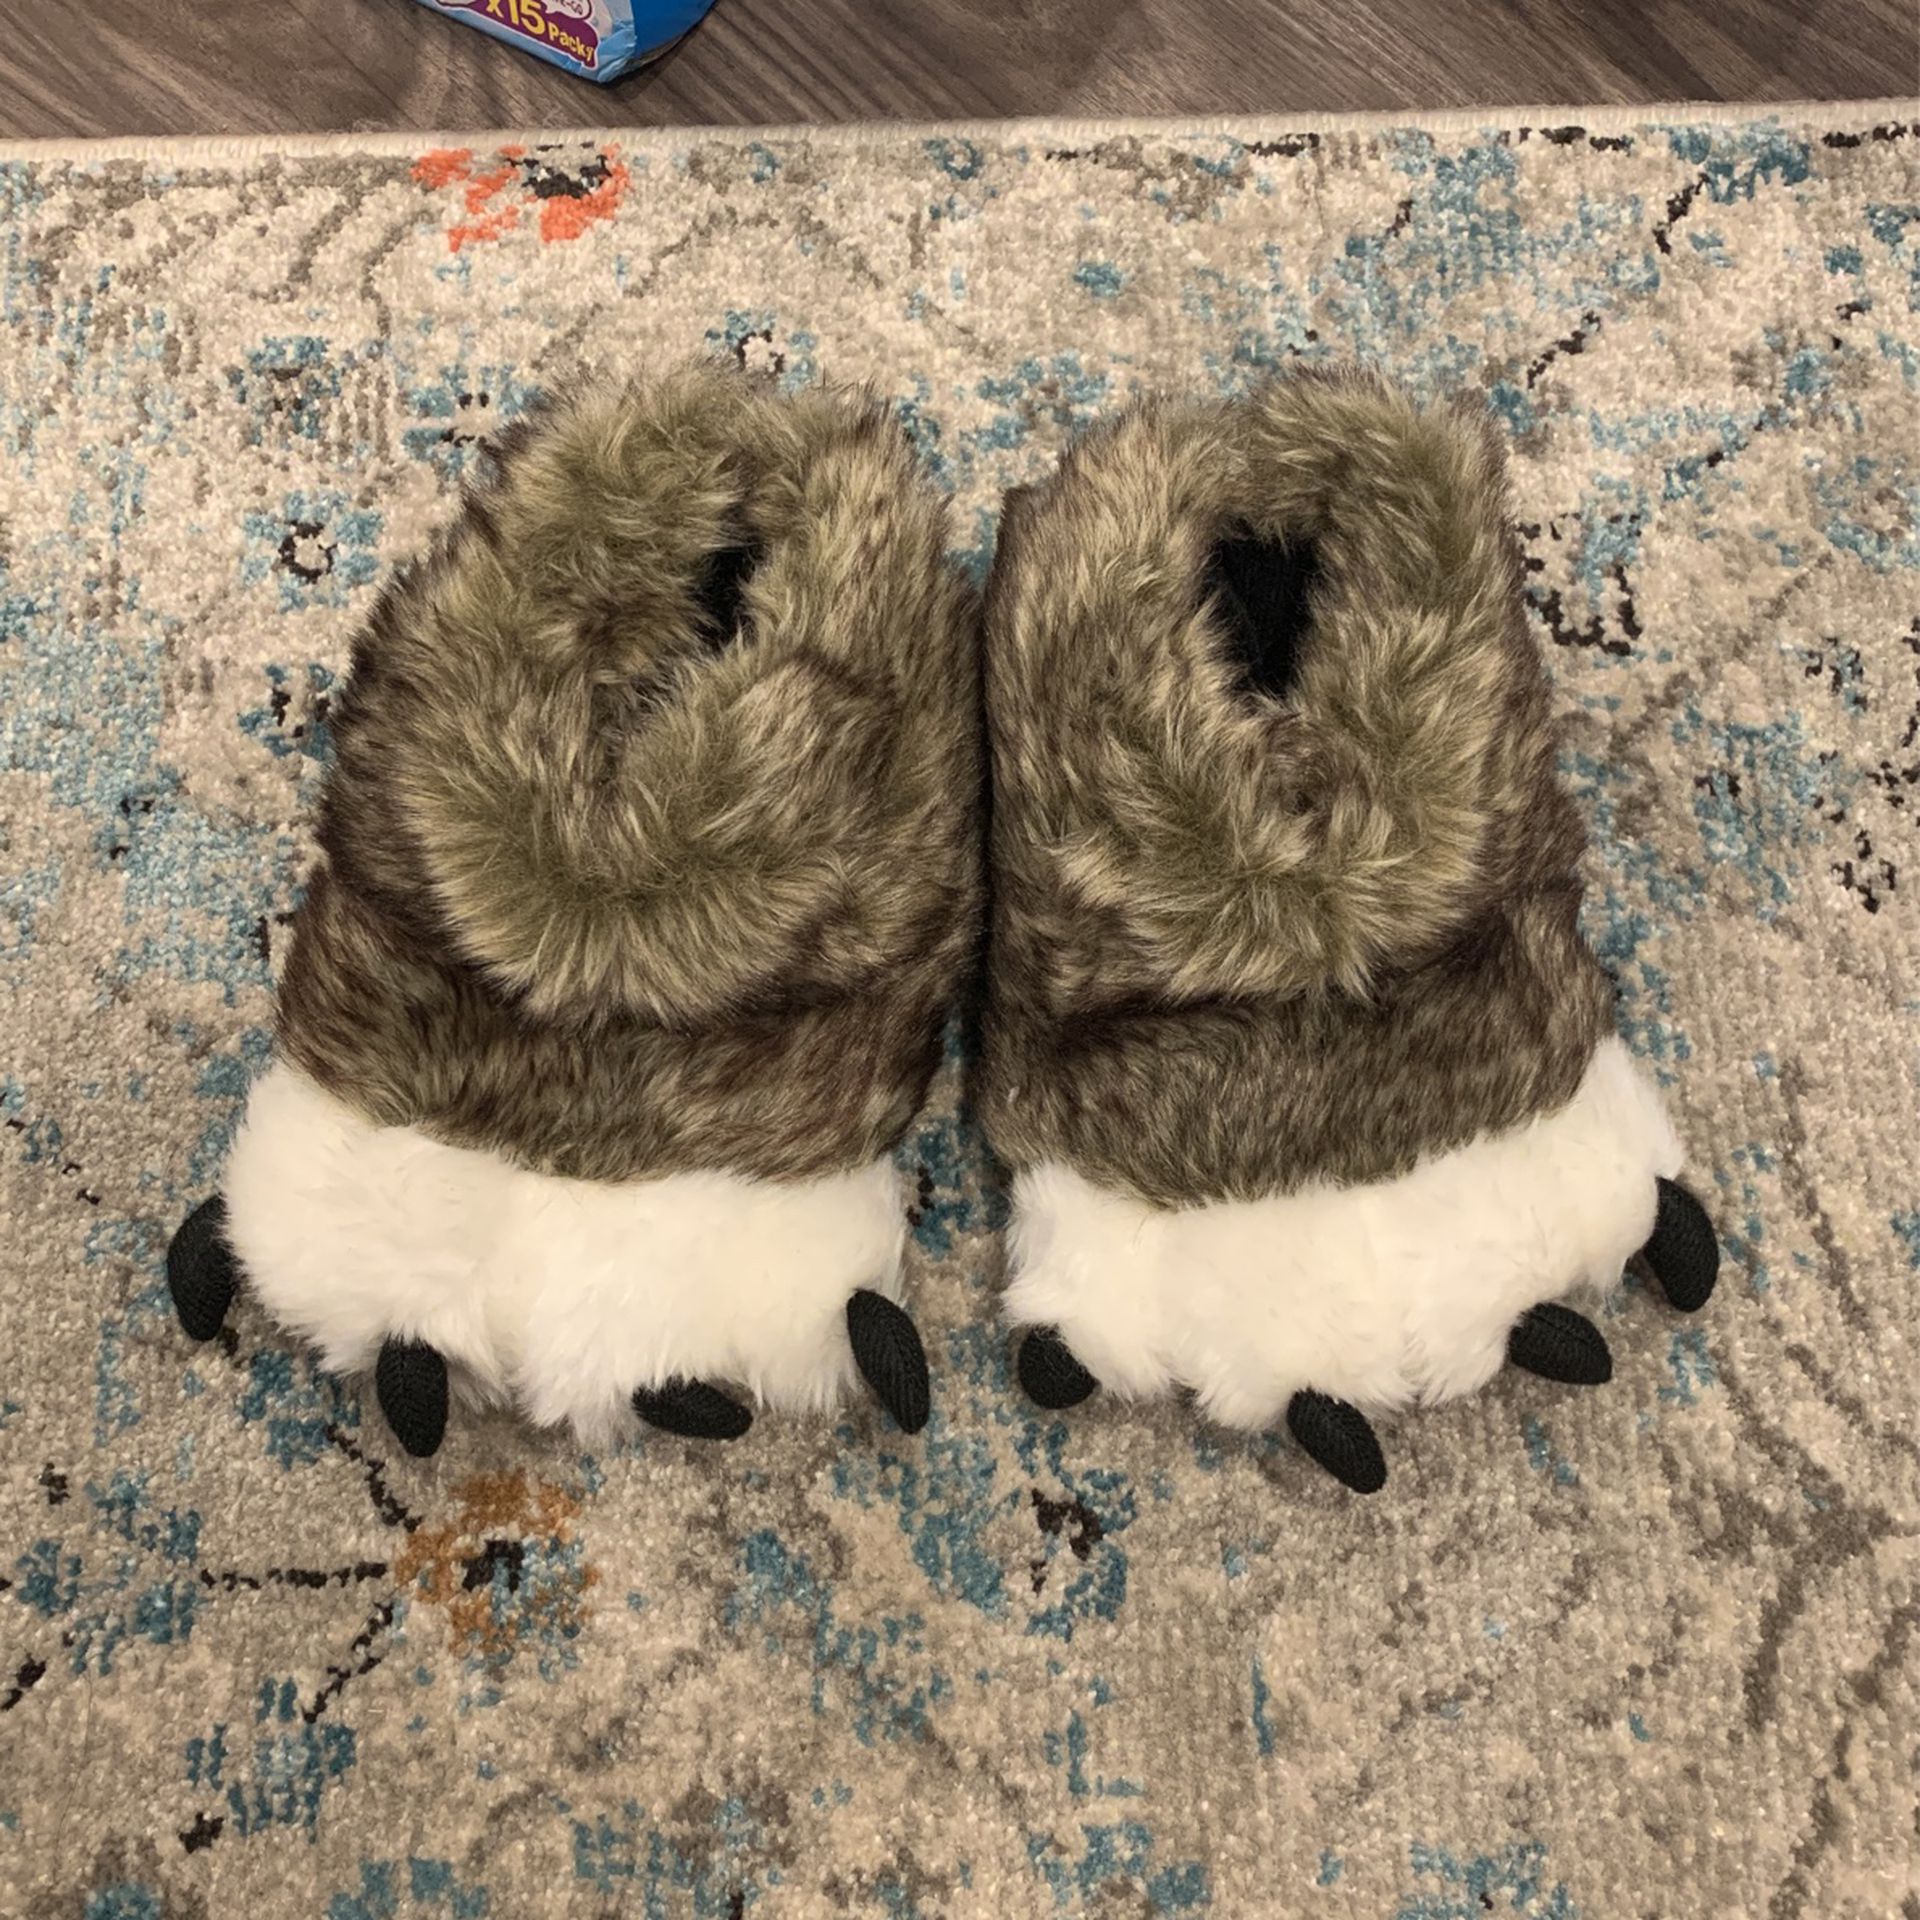 Baby stuffed bear shoes